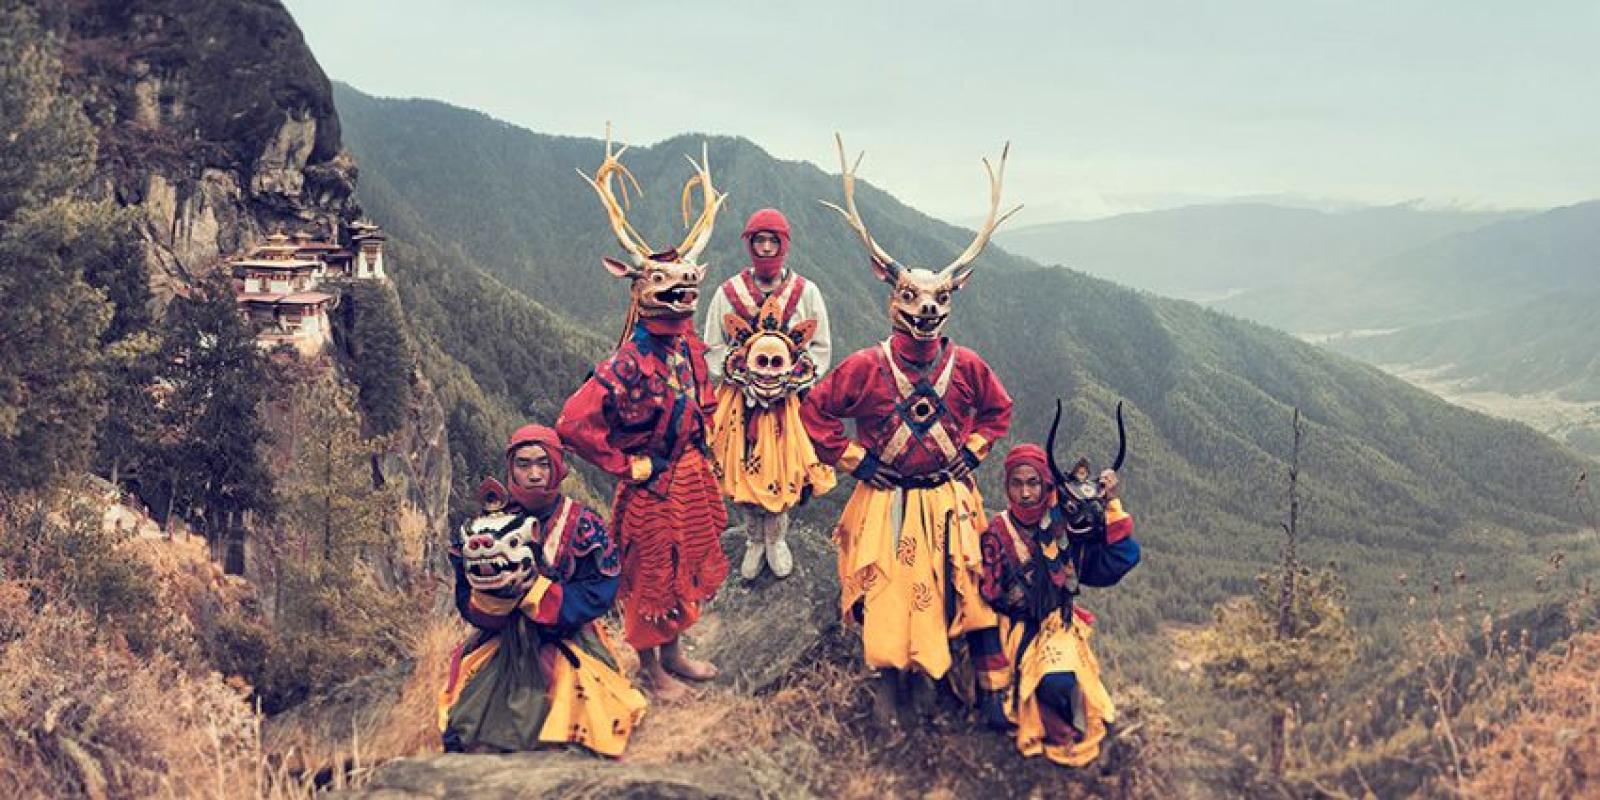 Jimmy Nelson - XXIX 3 // XXIX Bhutan, Fotografie 2016, Druck nach